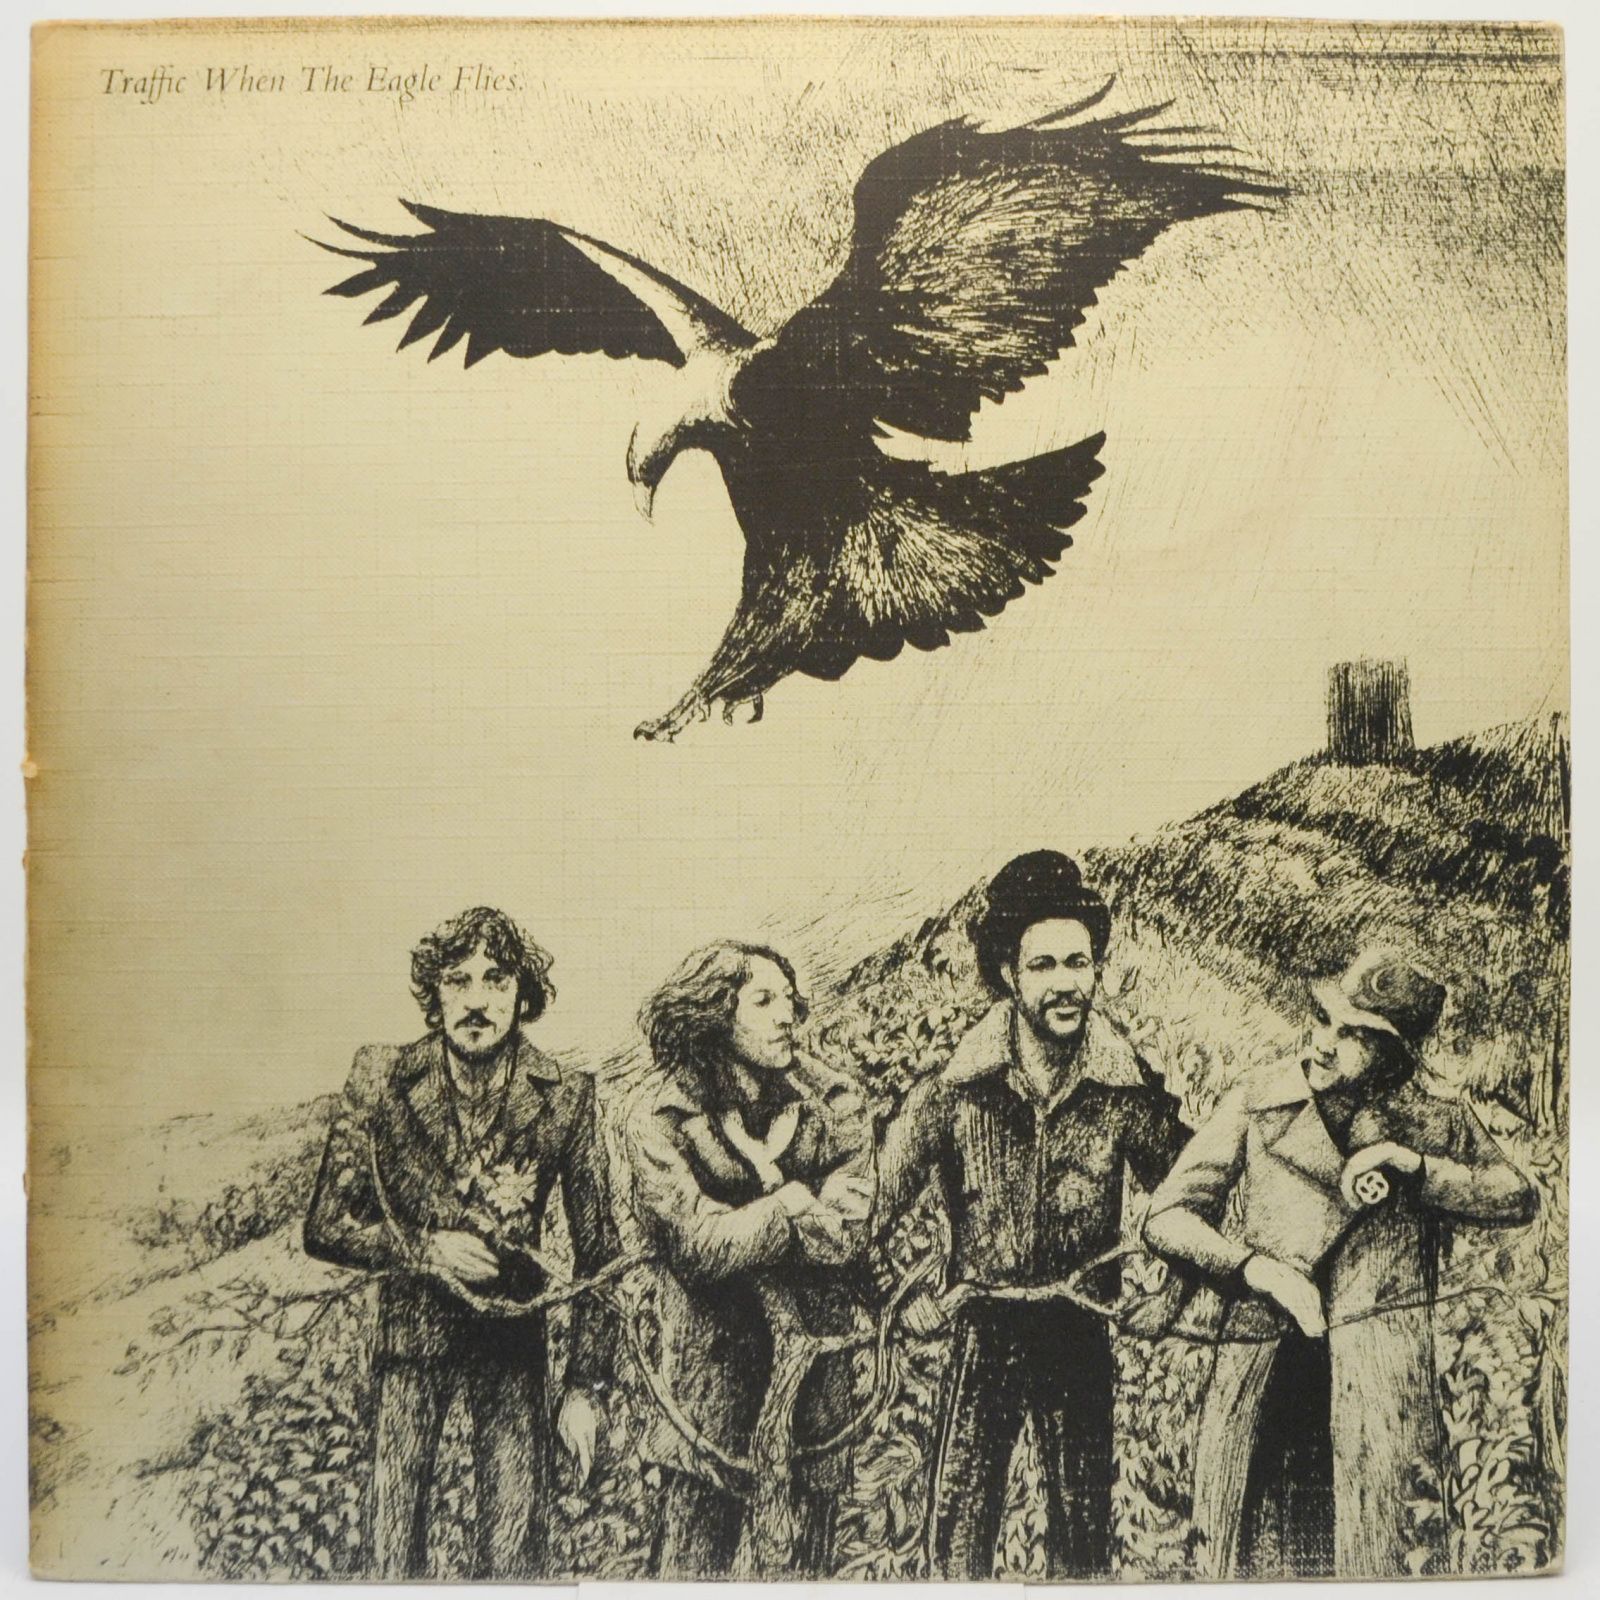 Traffic — When The Eagle Flies, 1974